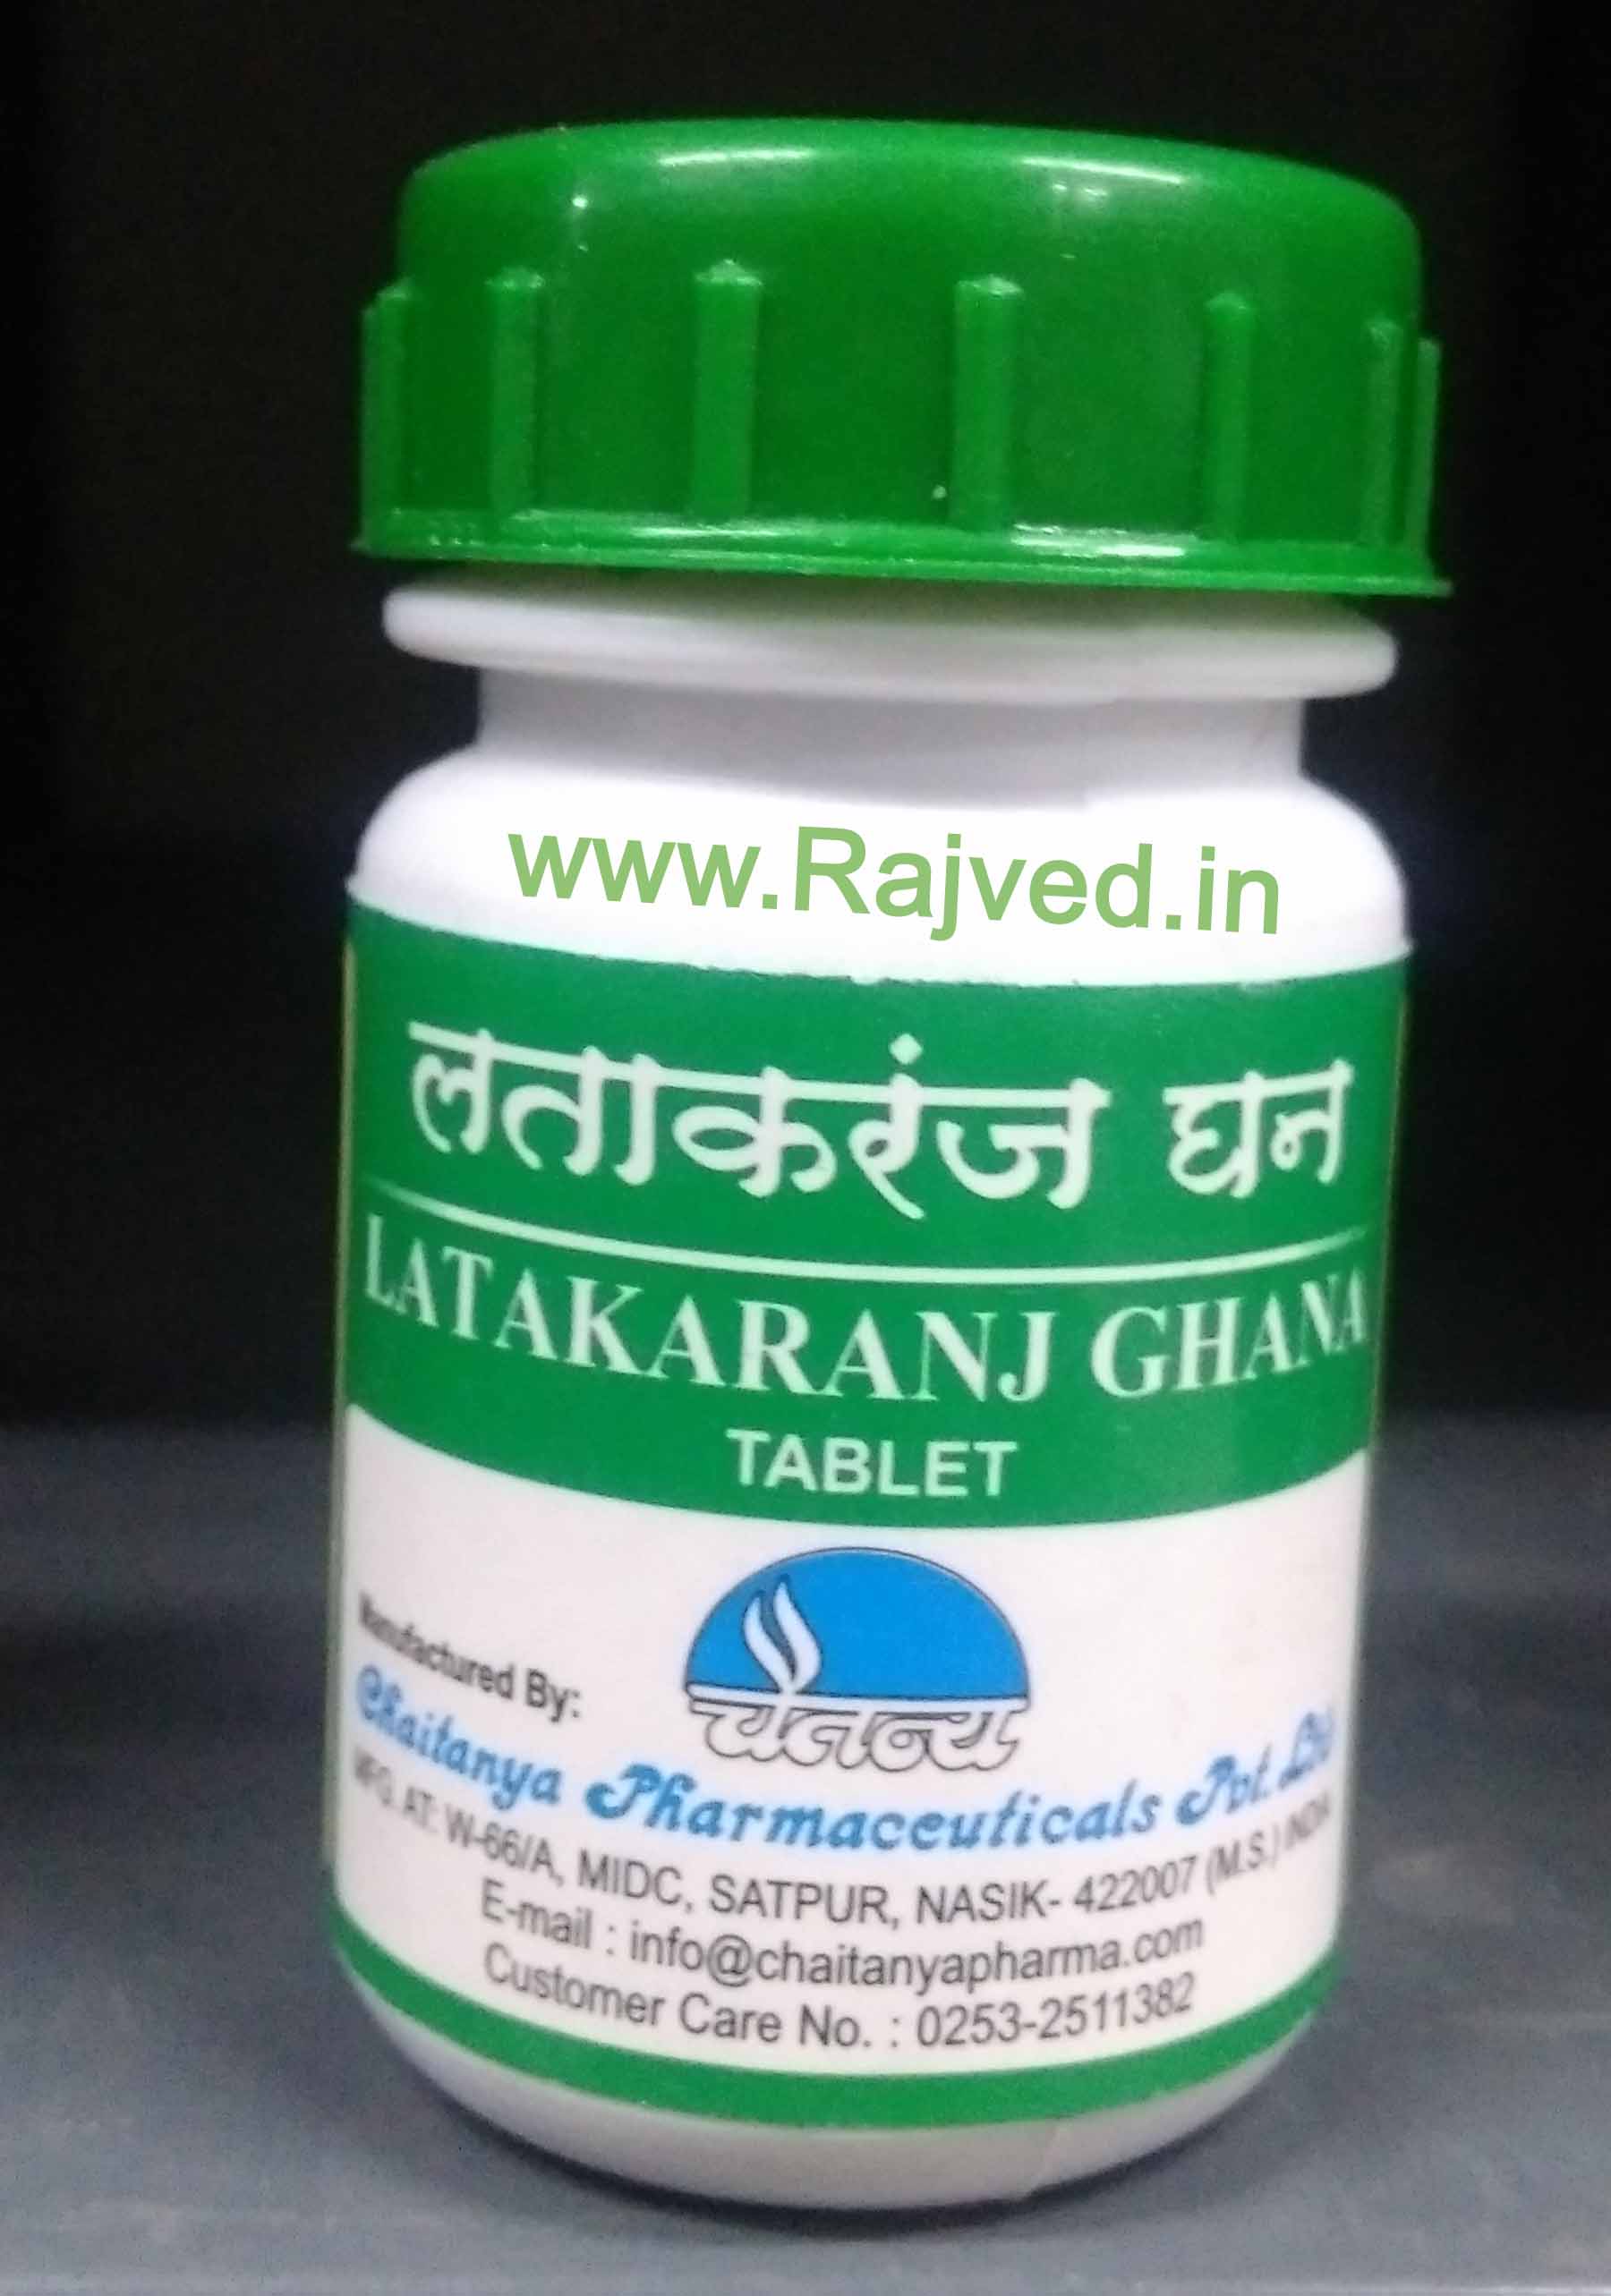 latakaranj ghana 2000tab upto 20% off free shipping chaitanya pharmaceuticals